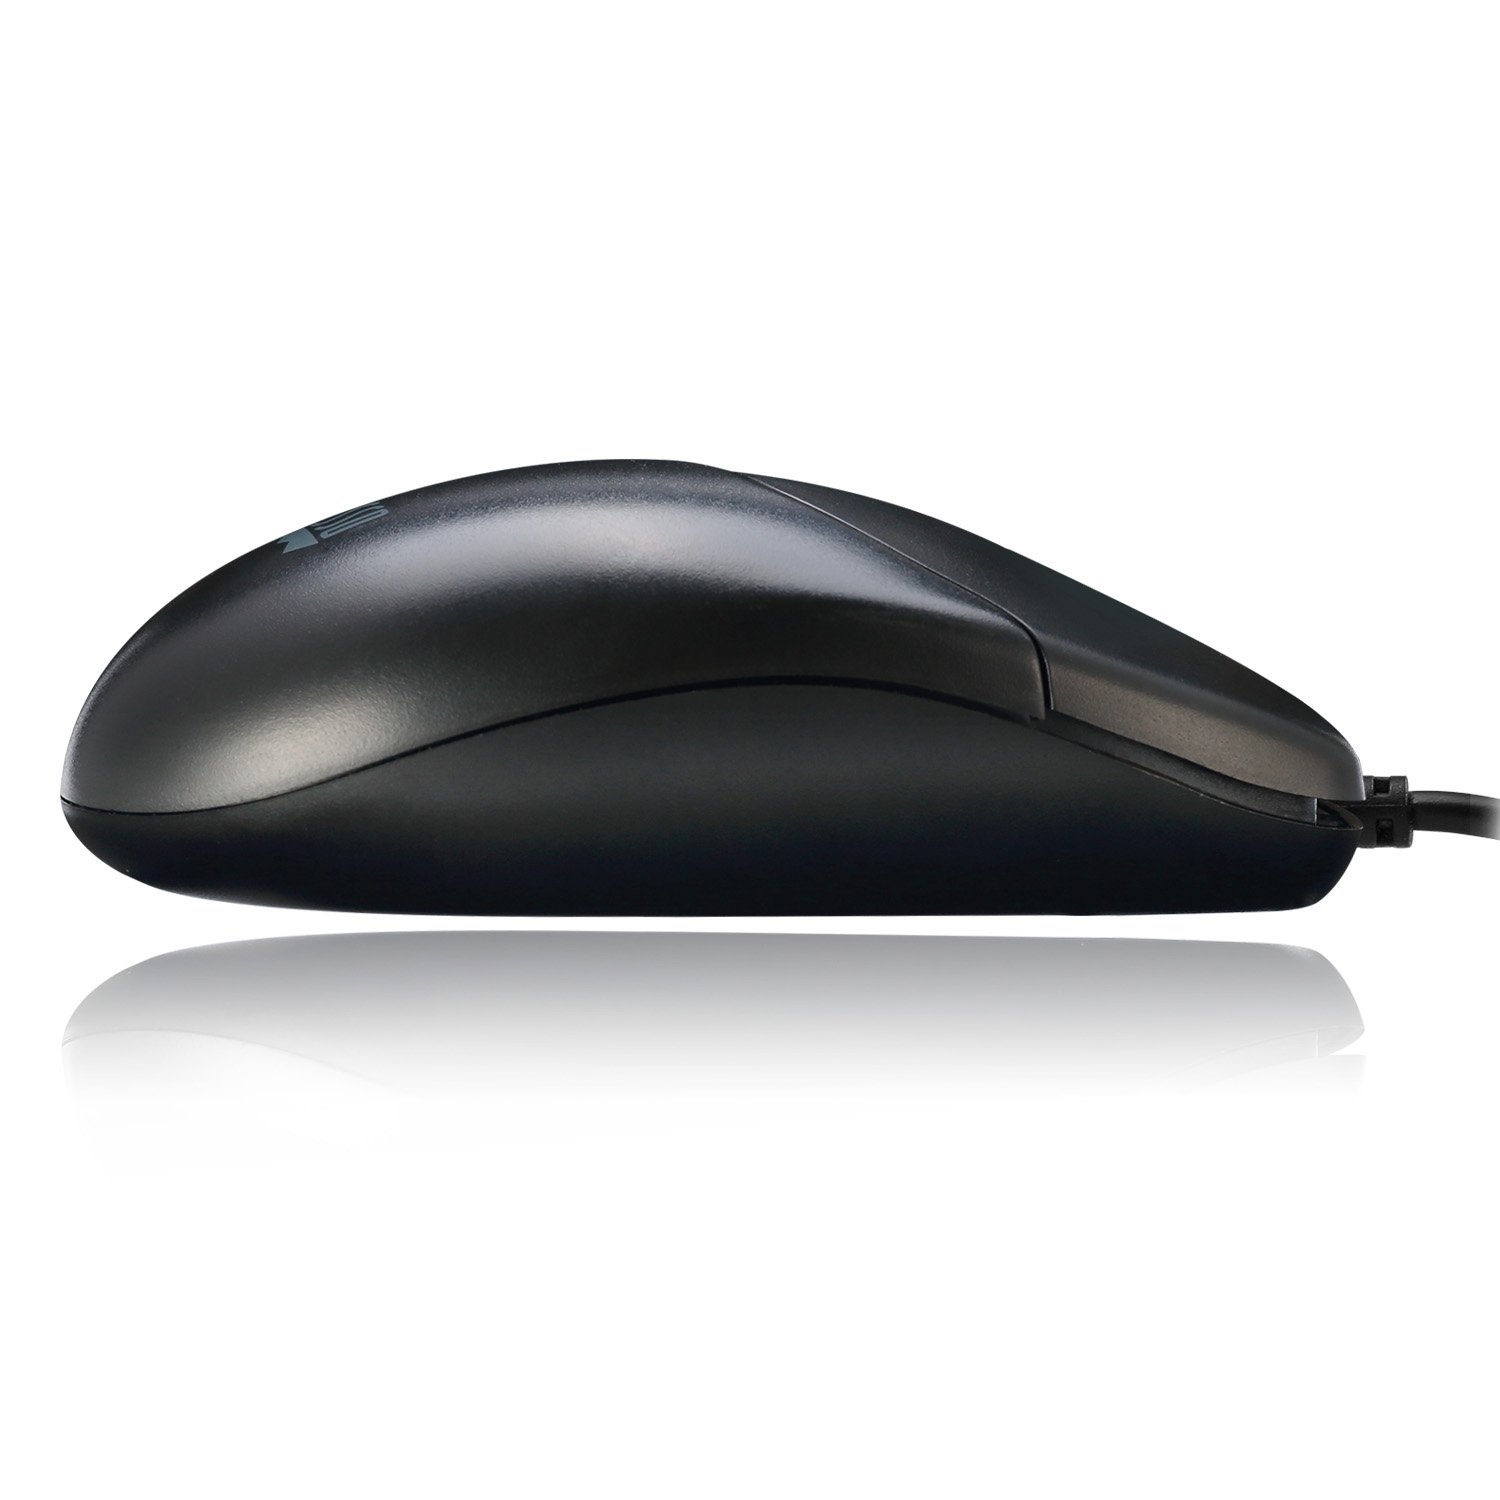 Adesso iMouse M6-TAA TAA-Compliant Desktop Full Size Mouse